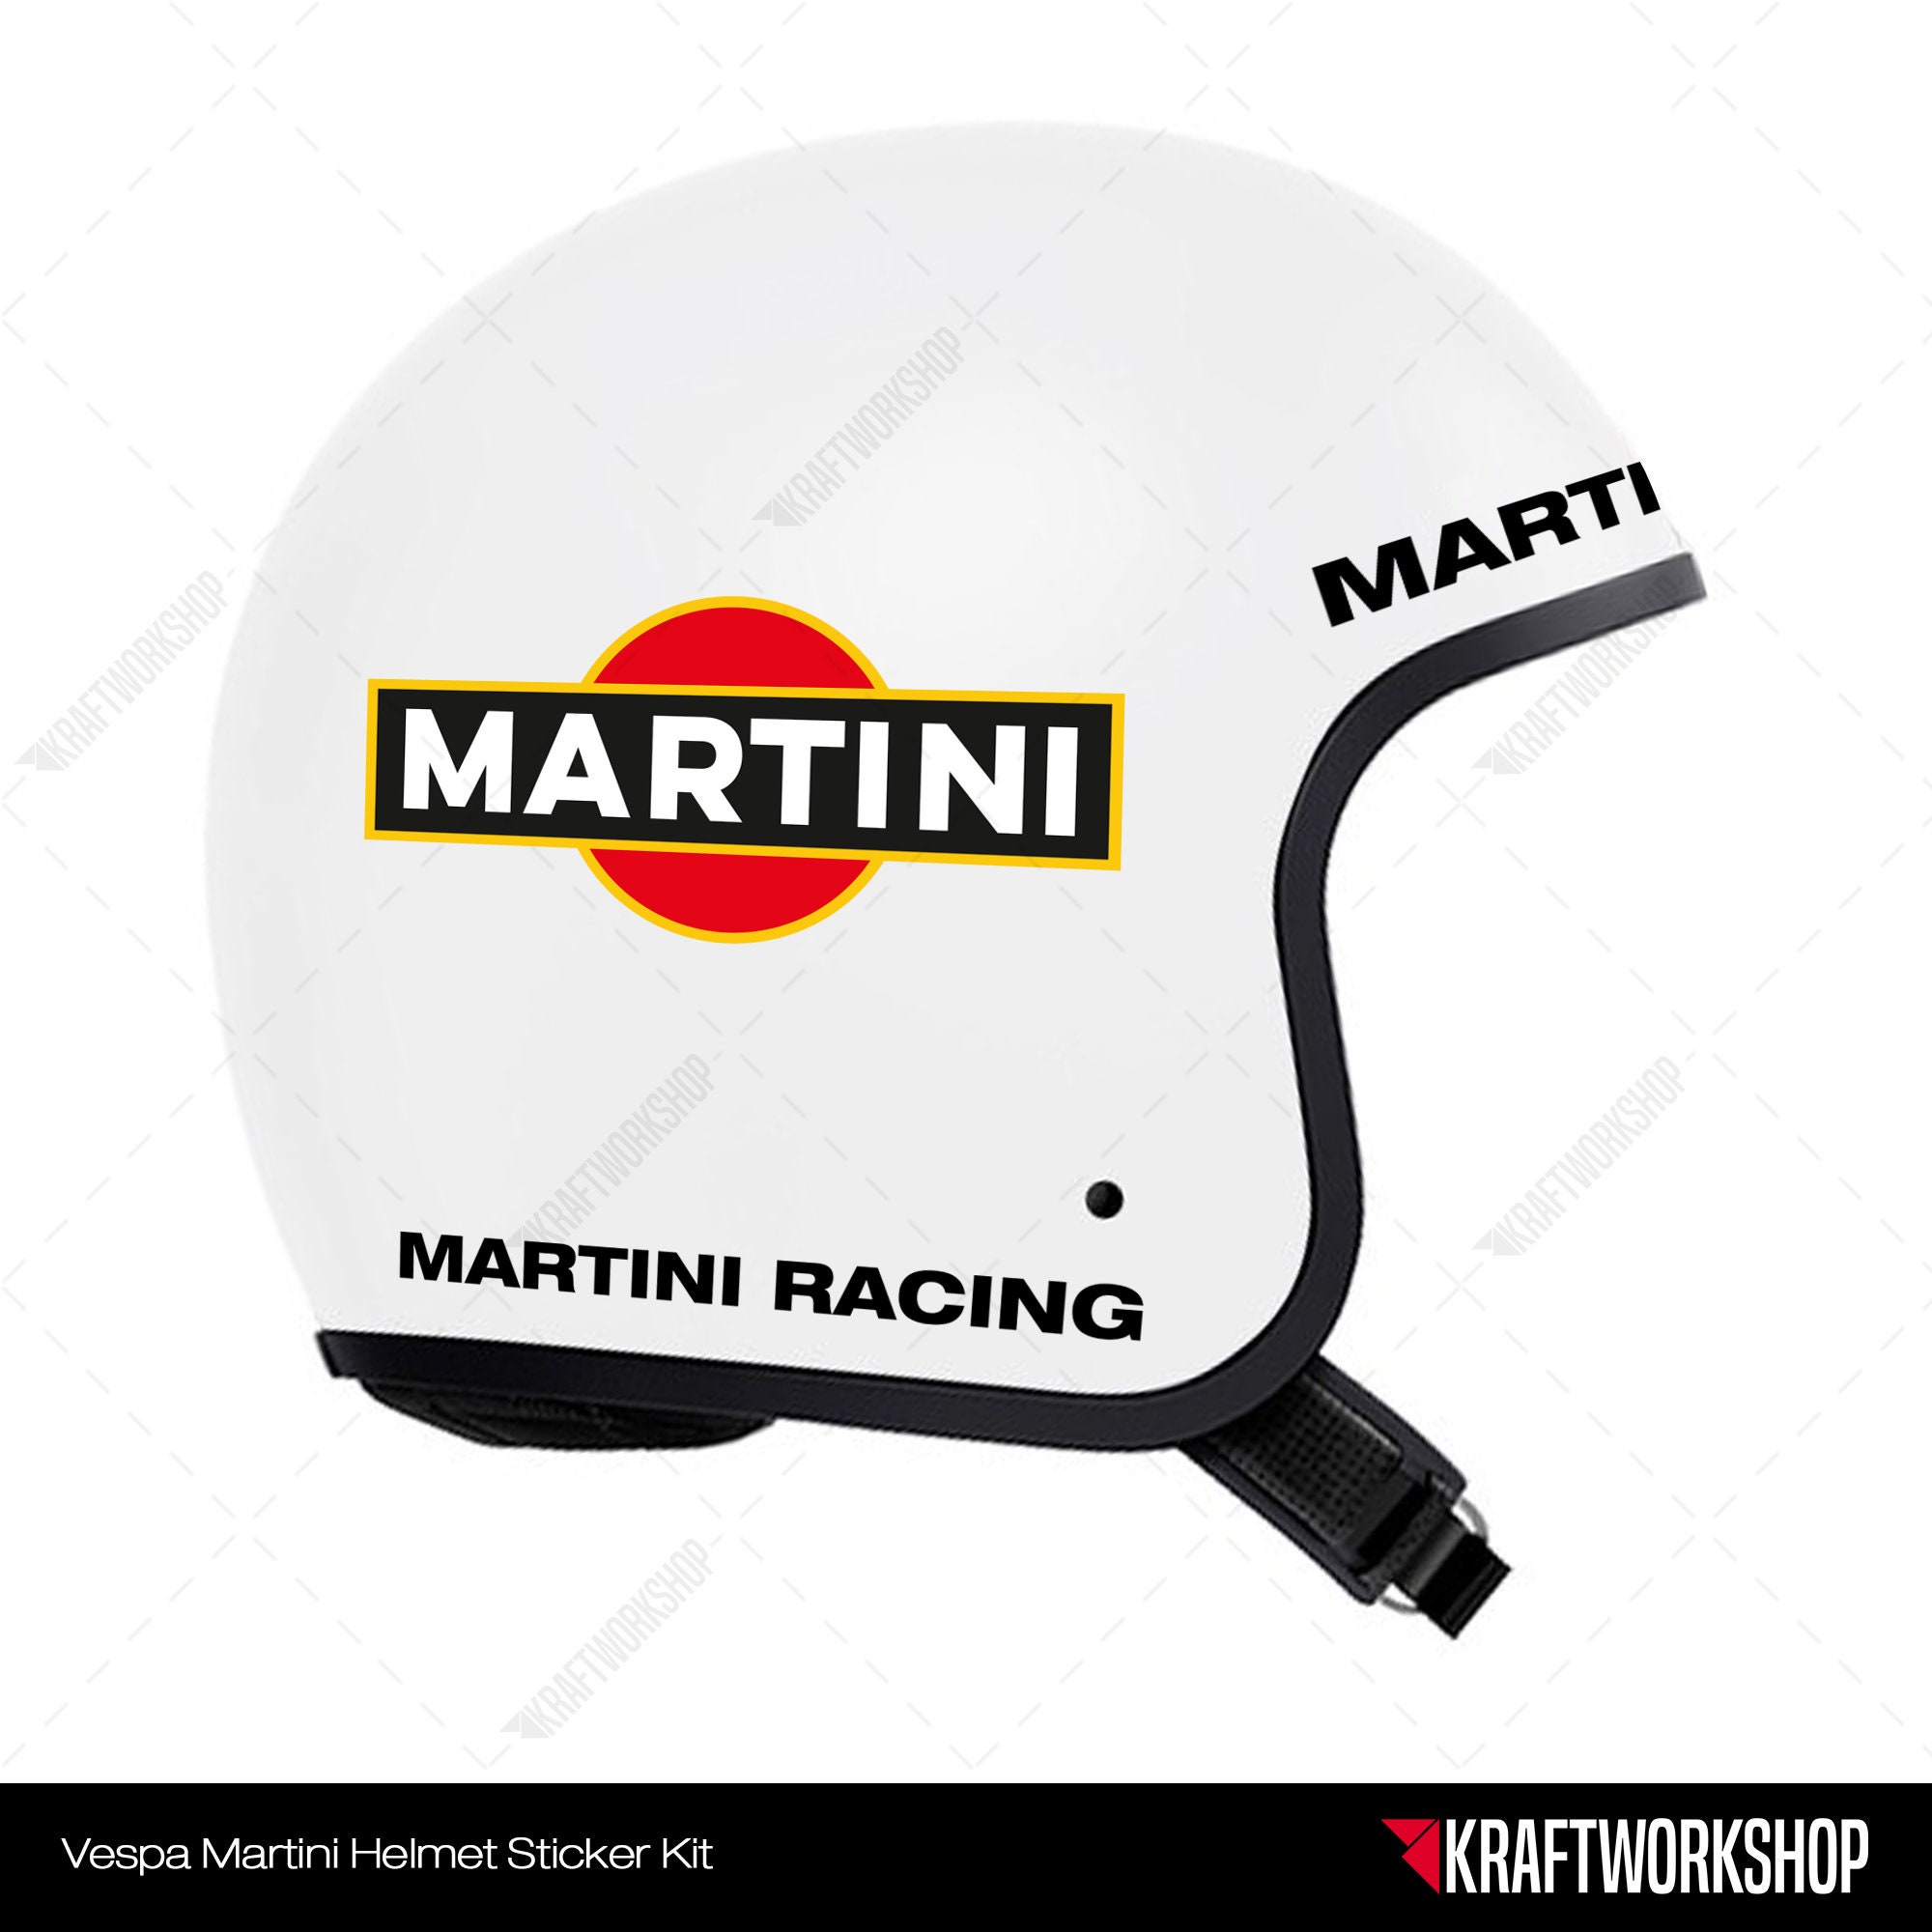 Martini Motorrad - Aufkleber Set